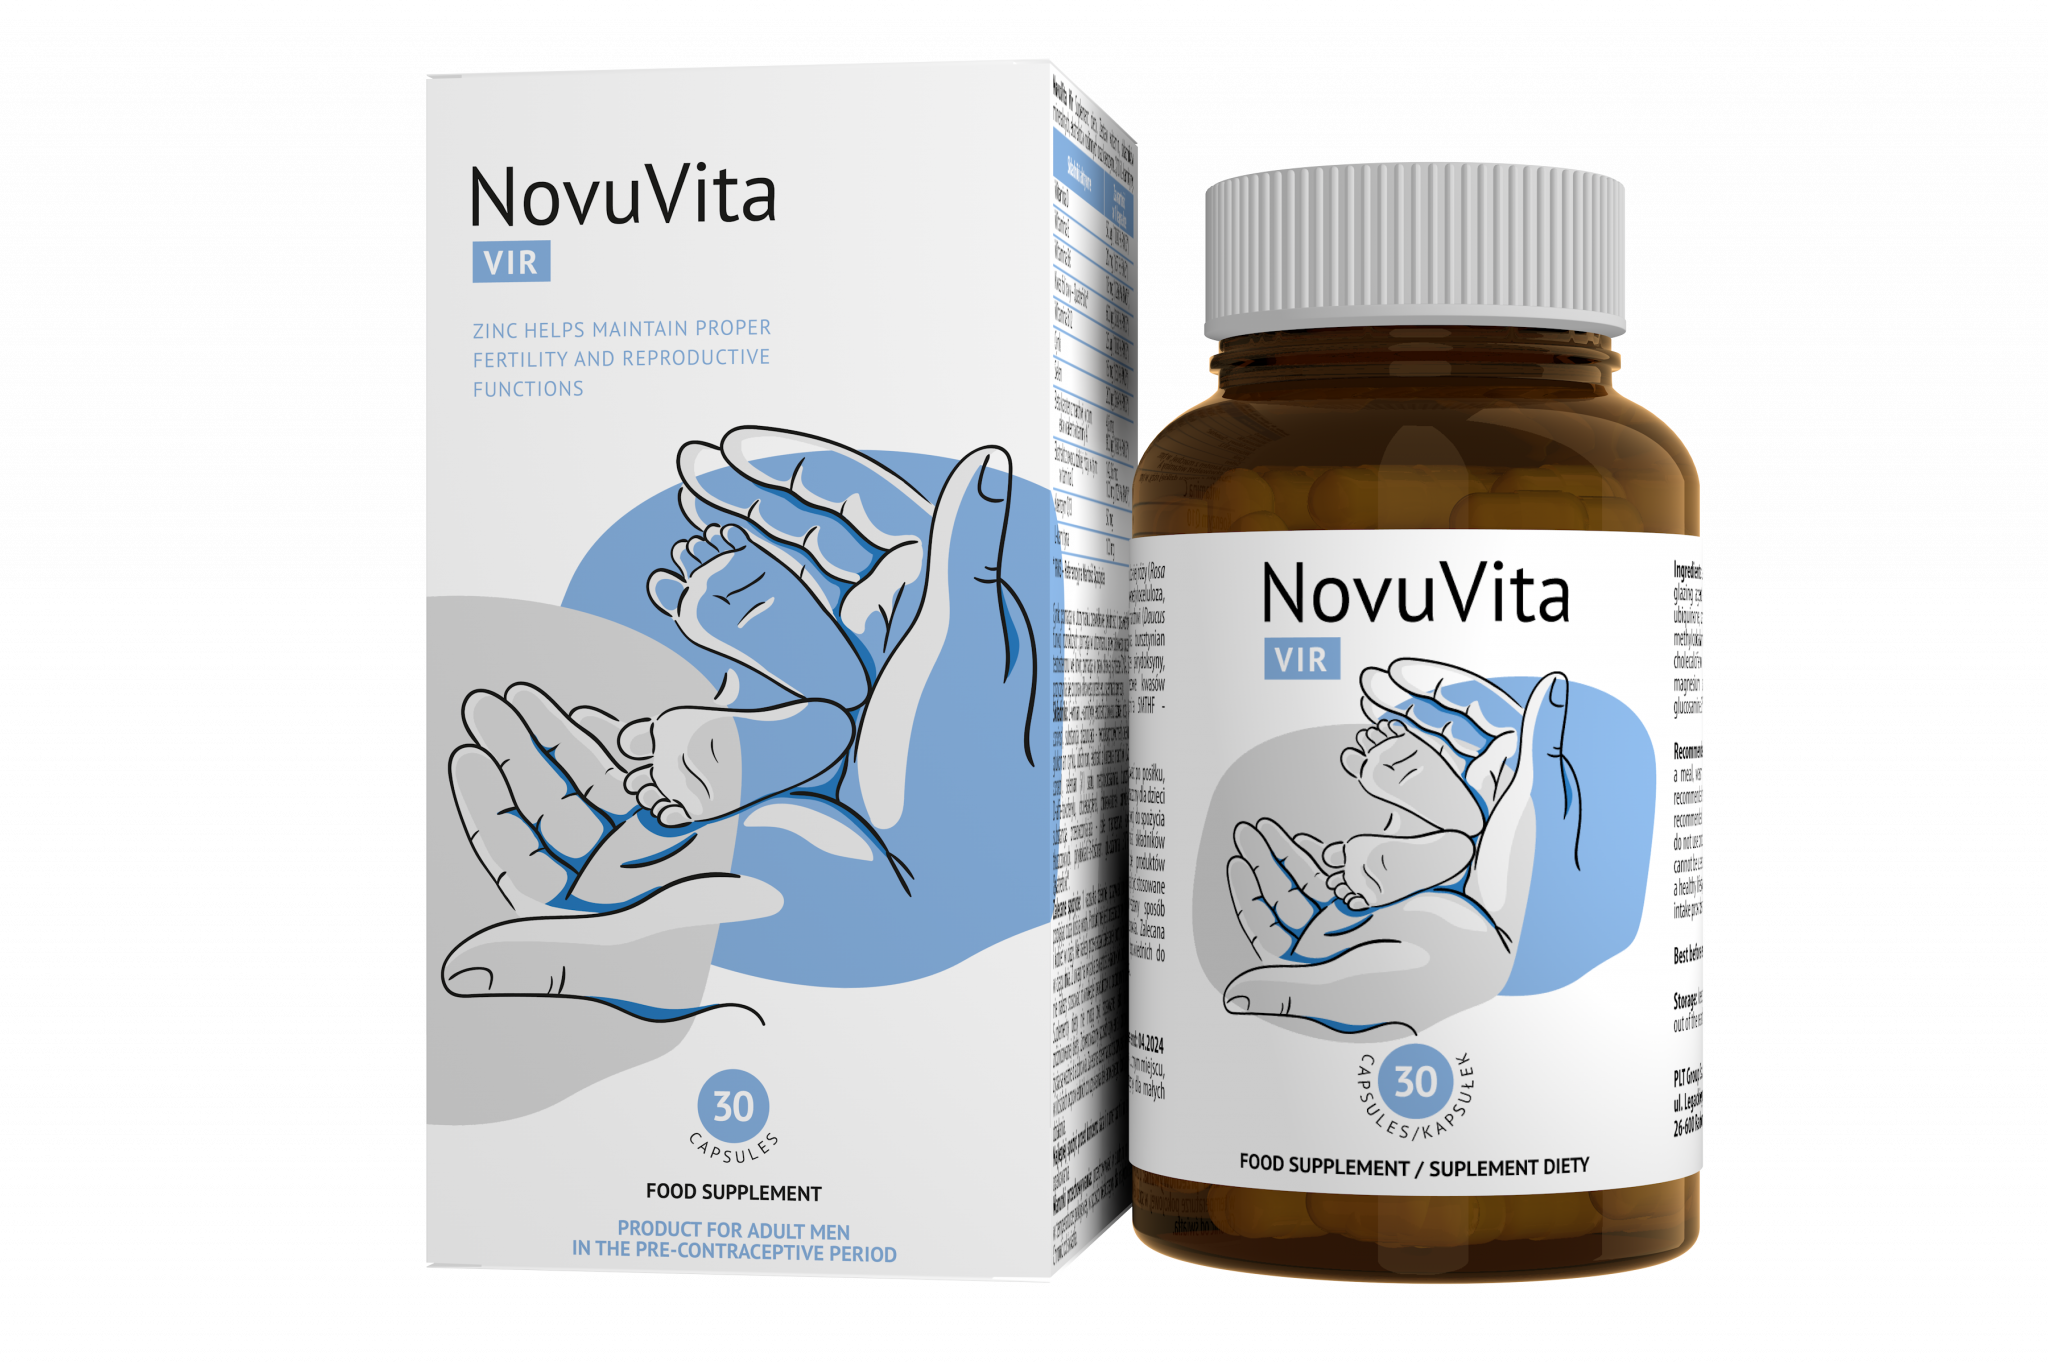 NovuVita Vir Customer Reviews